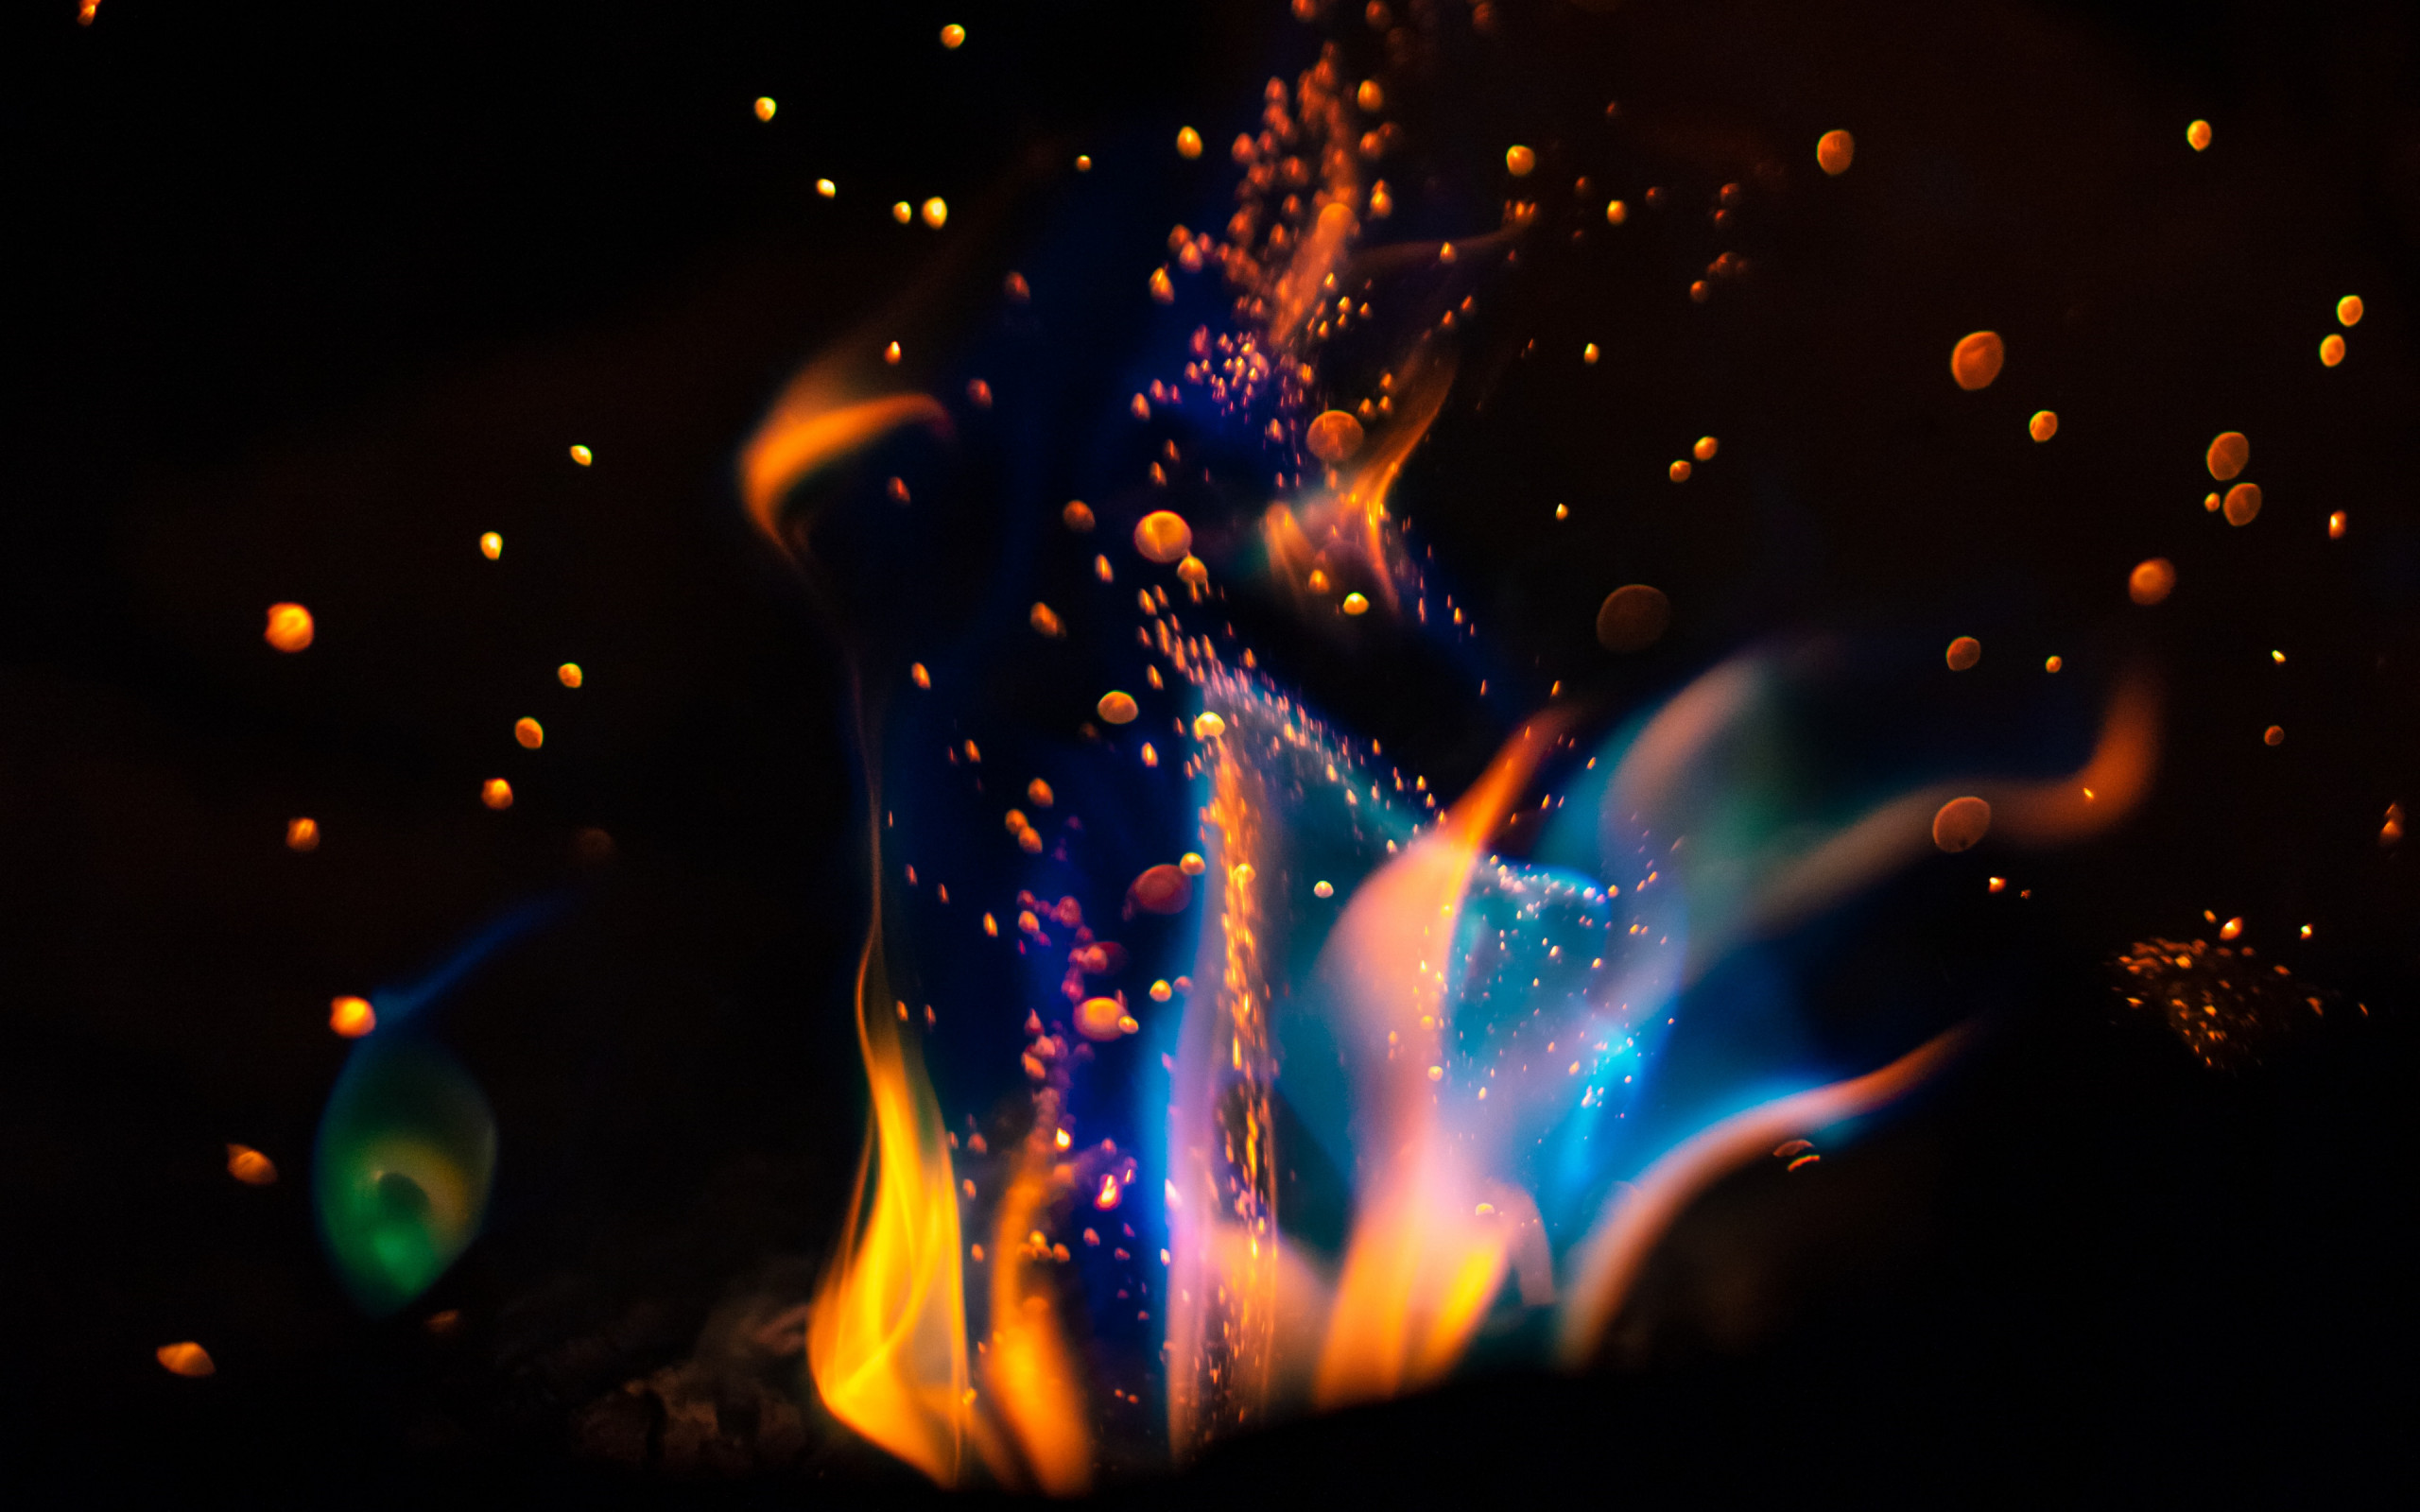 Hot flames in darkness wallpaper 2560x1600